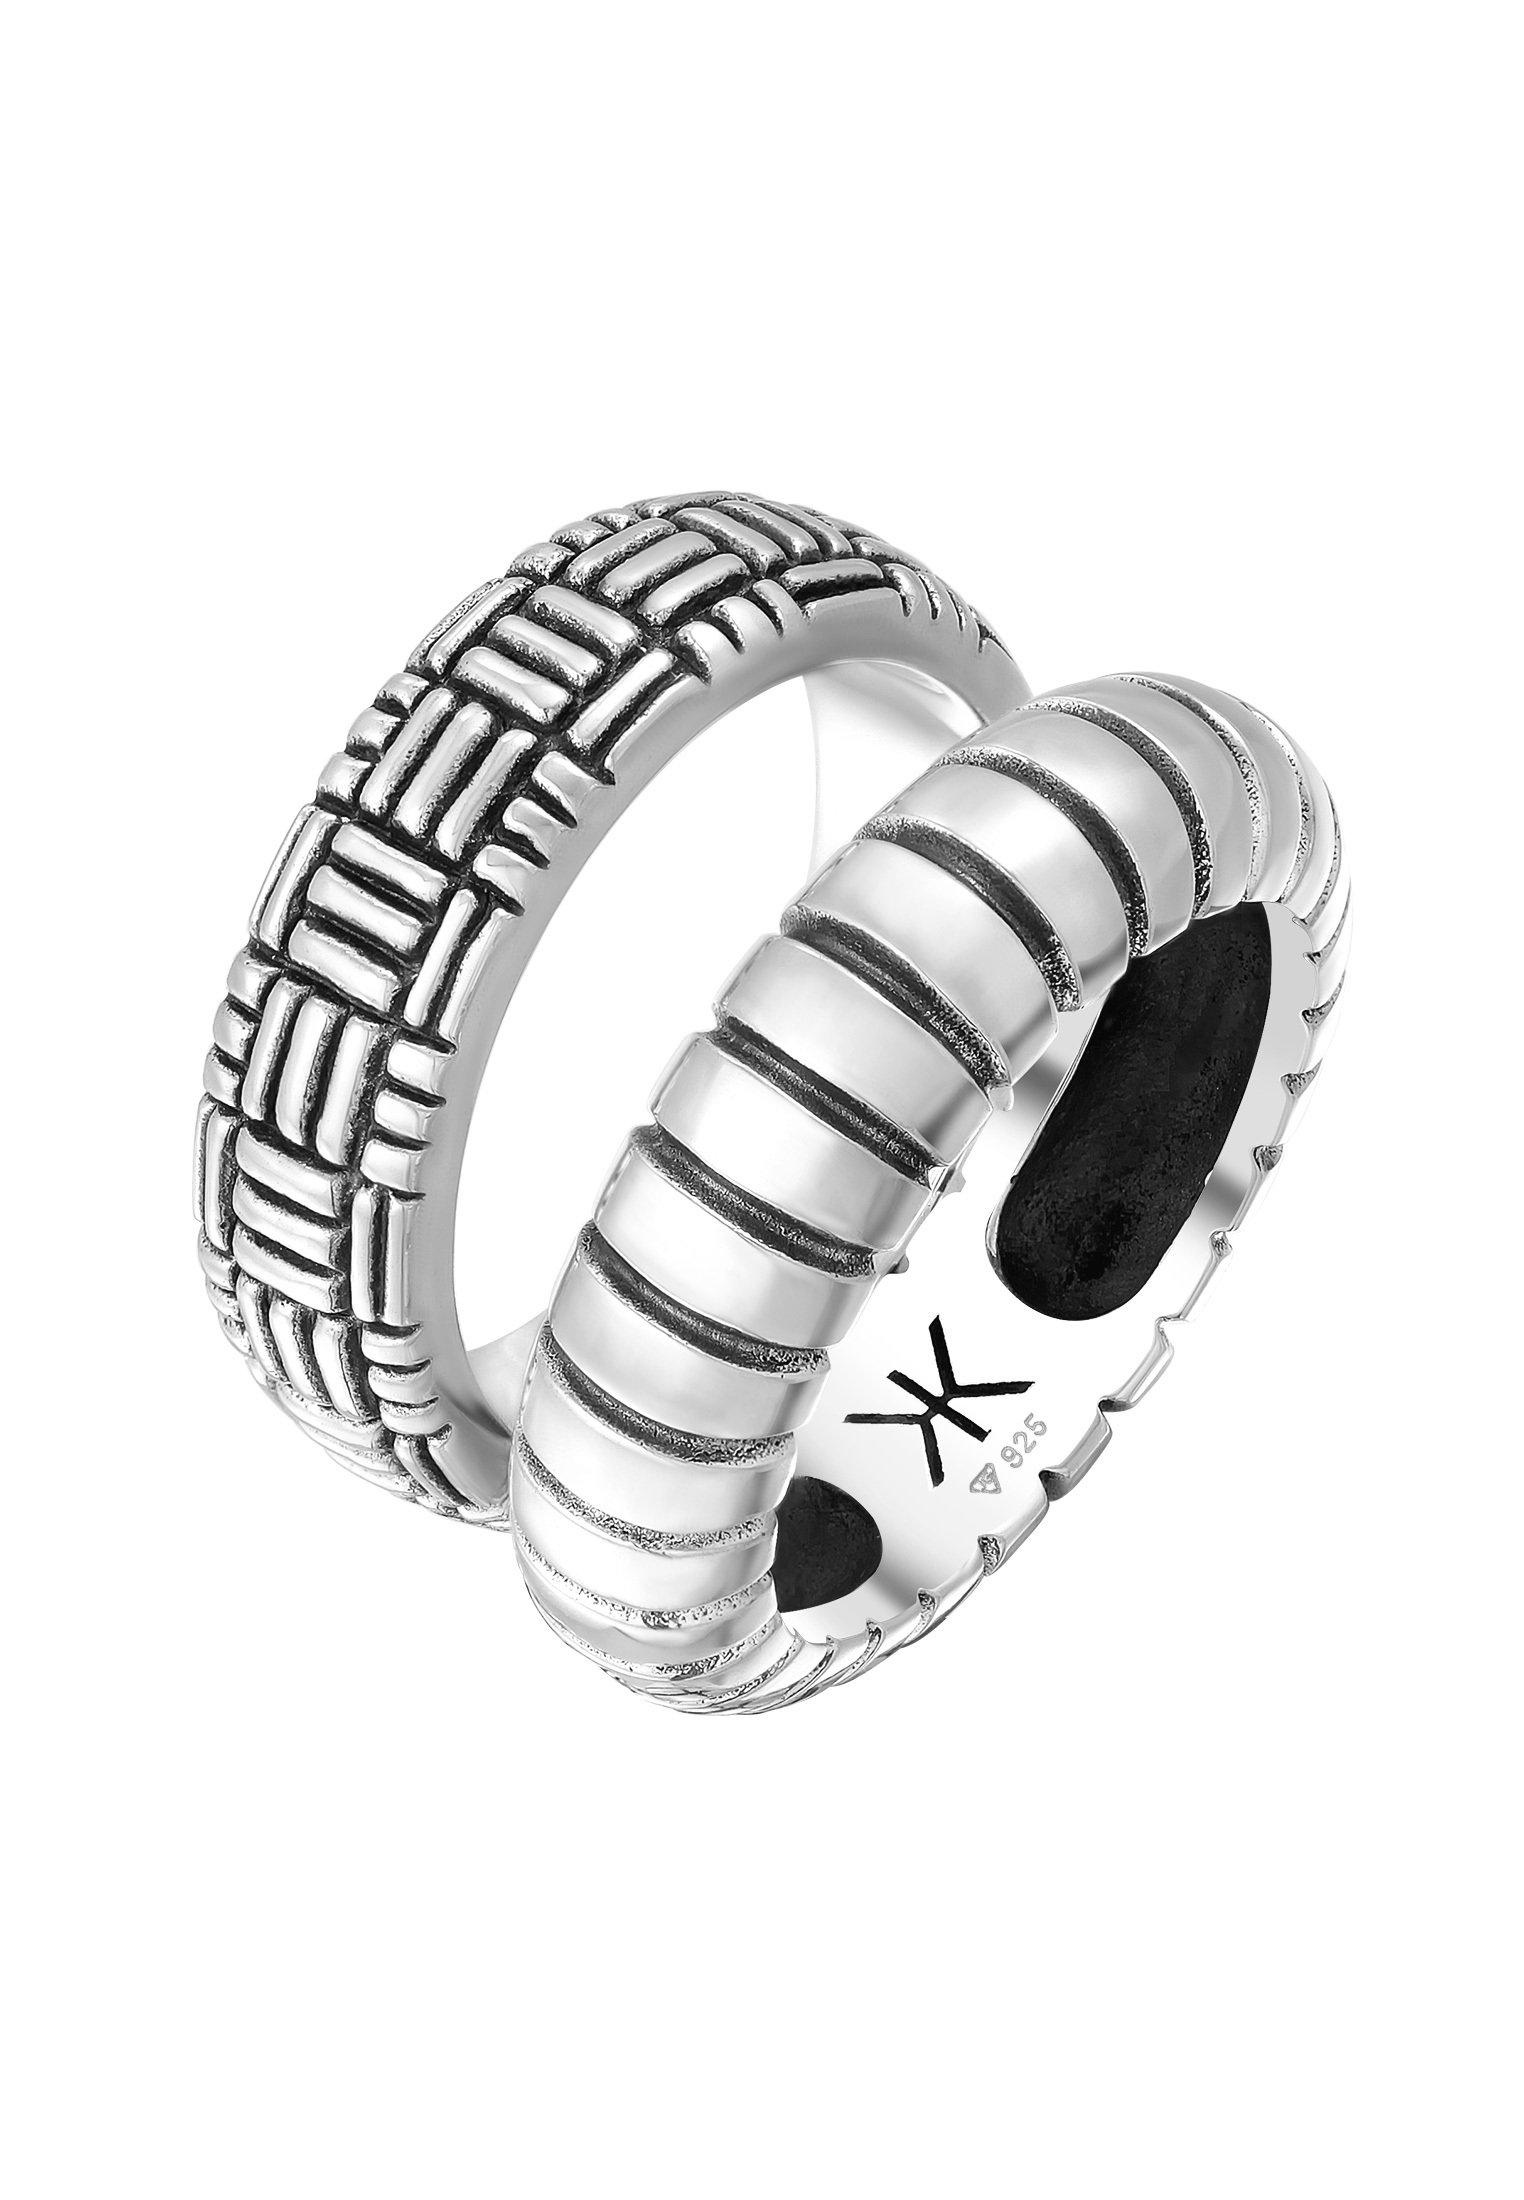 Kuzzoi Ring Set acquistare online | MANOR - Oxidiert Silber 925 Vintage Bandring